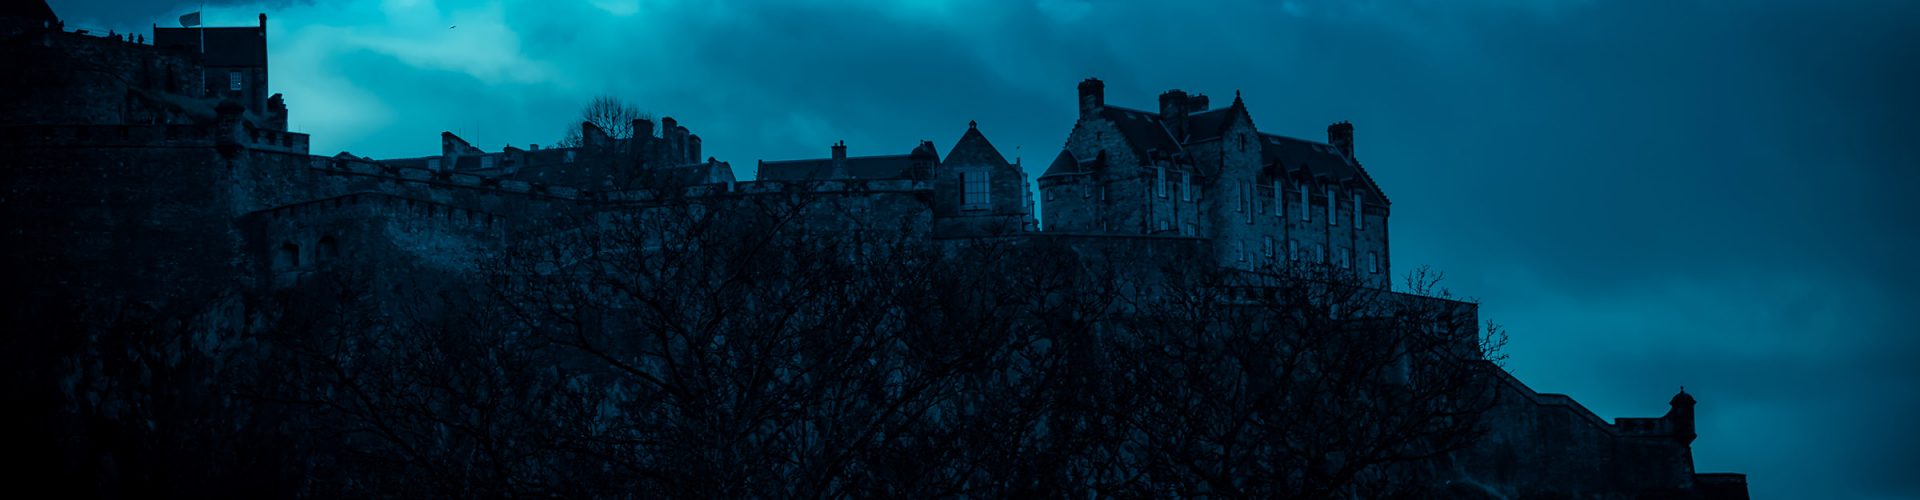 A spooky darkened silhouette of Edinburgh Castle at night